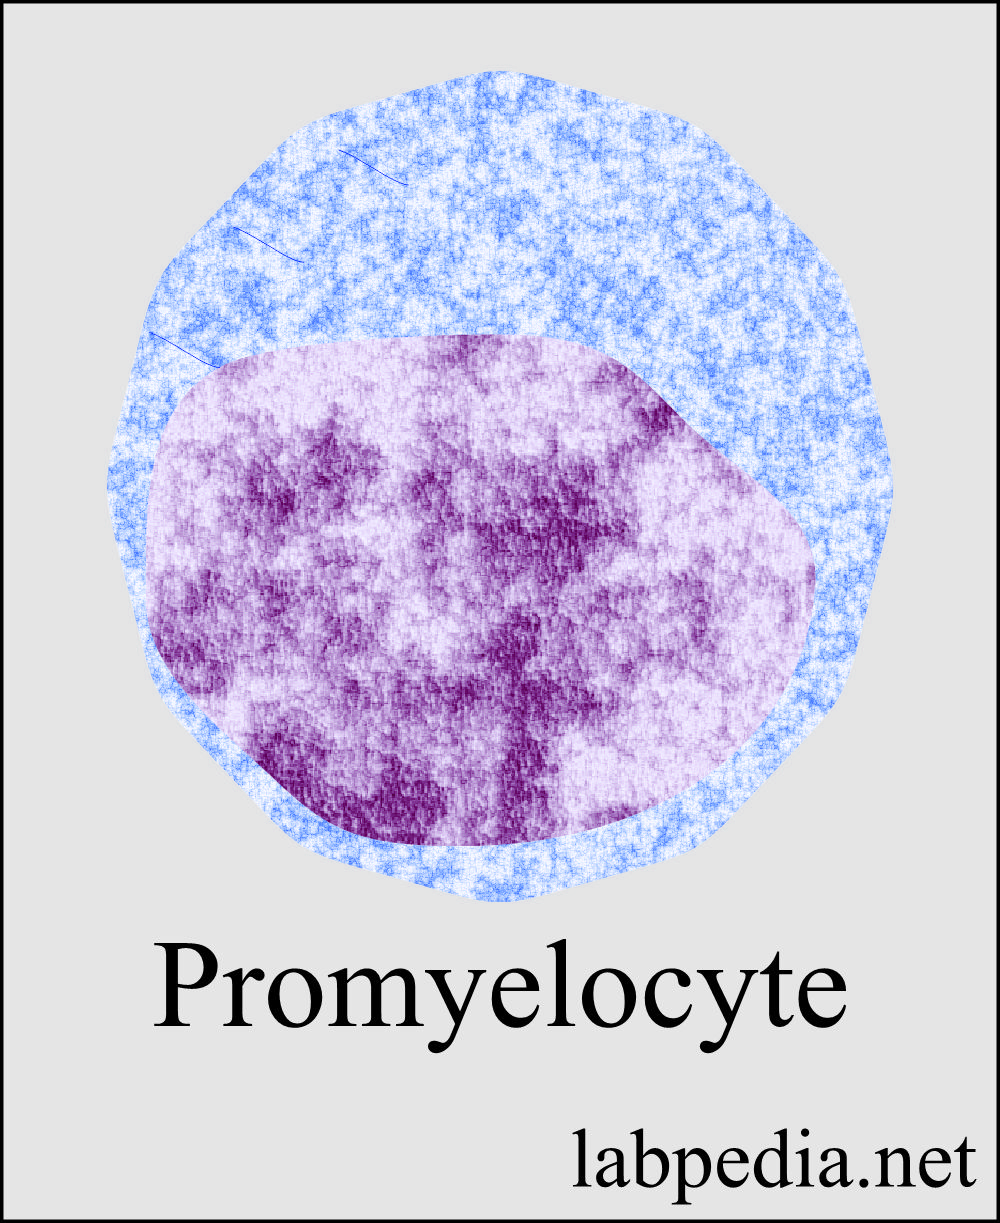 Promyelocytic cell